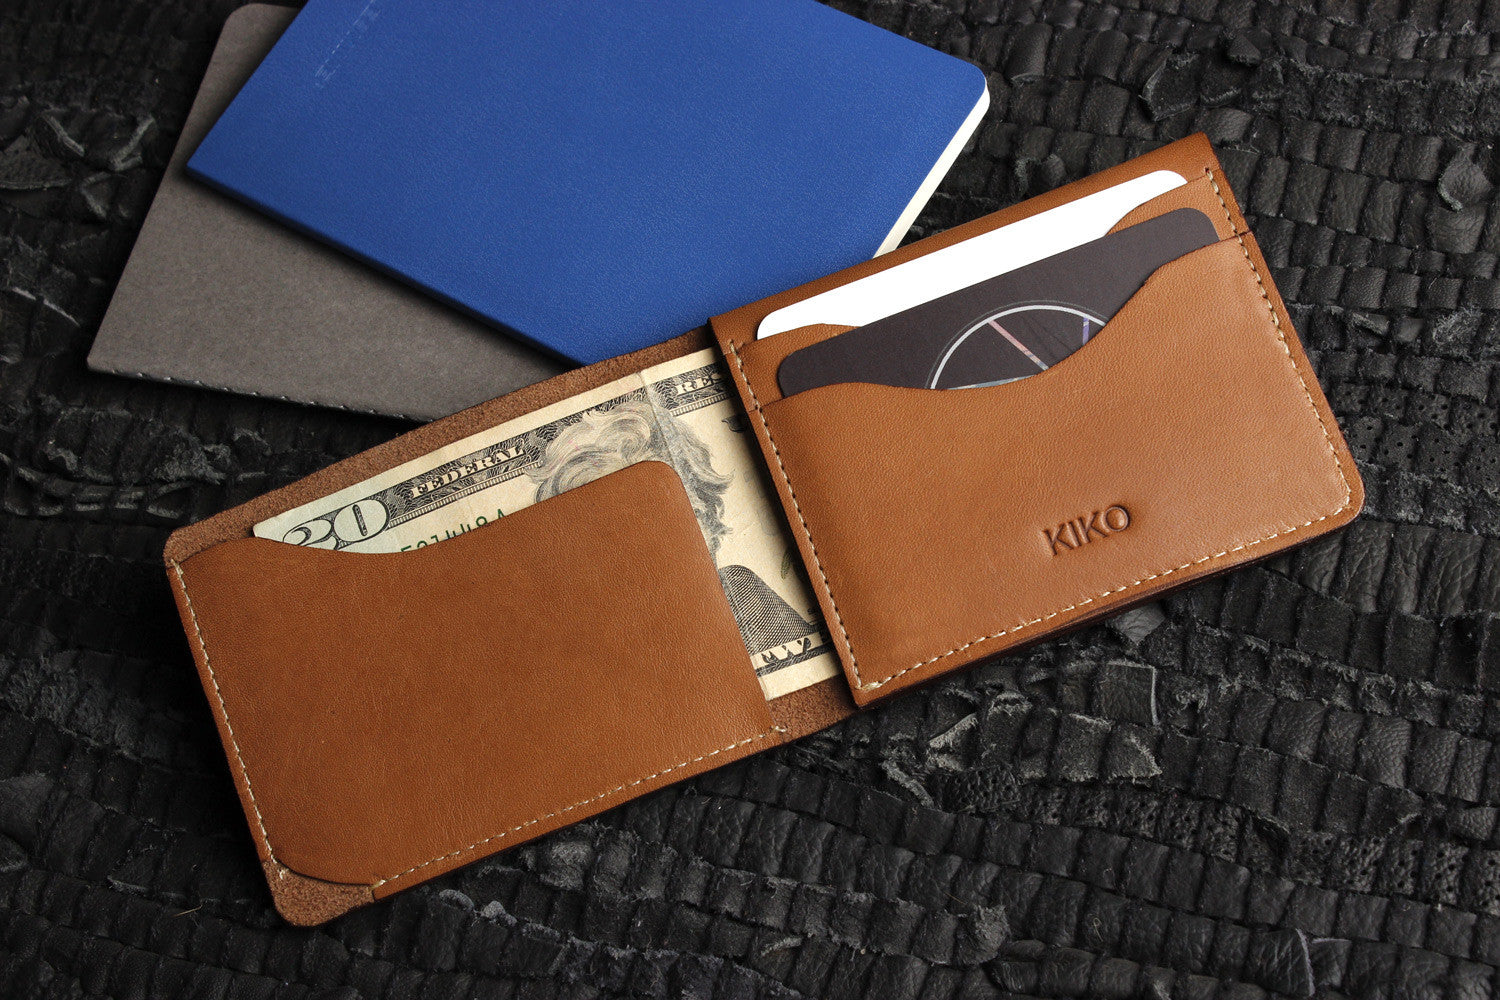 Simplistic Leather Wallet – Kiko Leather